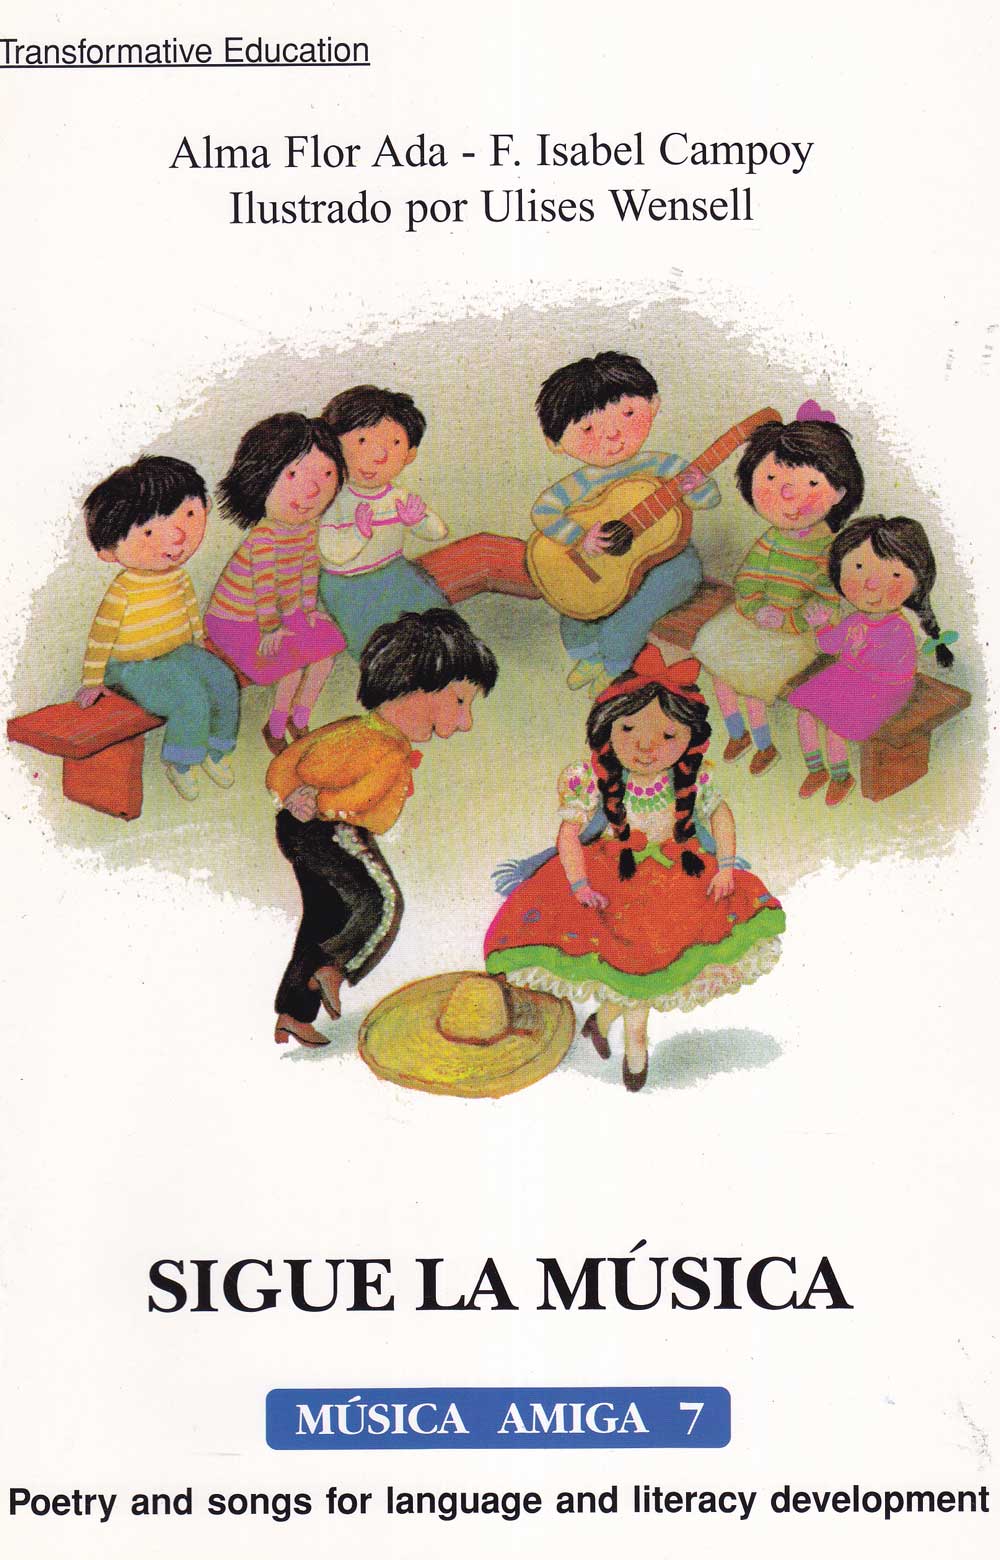 Musica Amiga Poetry and Music Collection, Rey Del Sol, Del Sol Books, Del Sol University